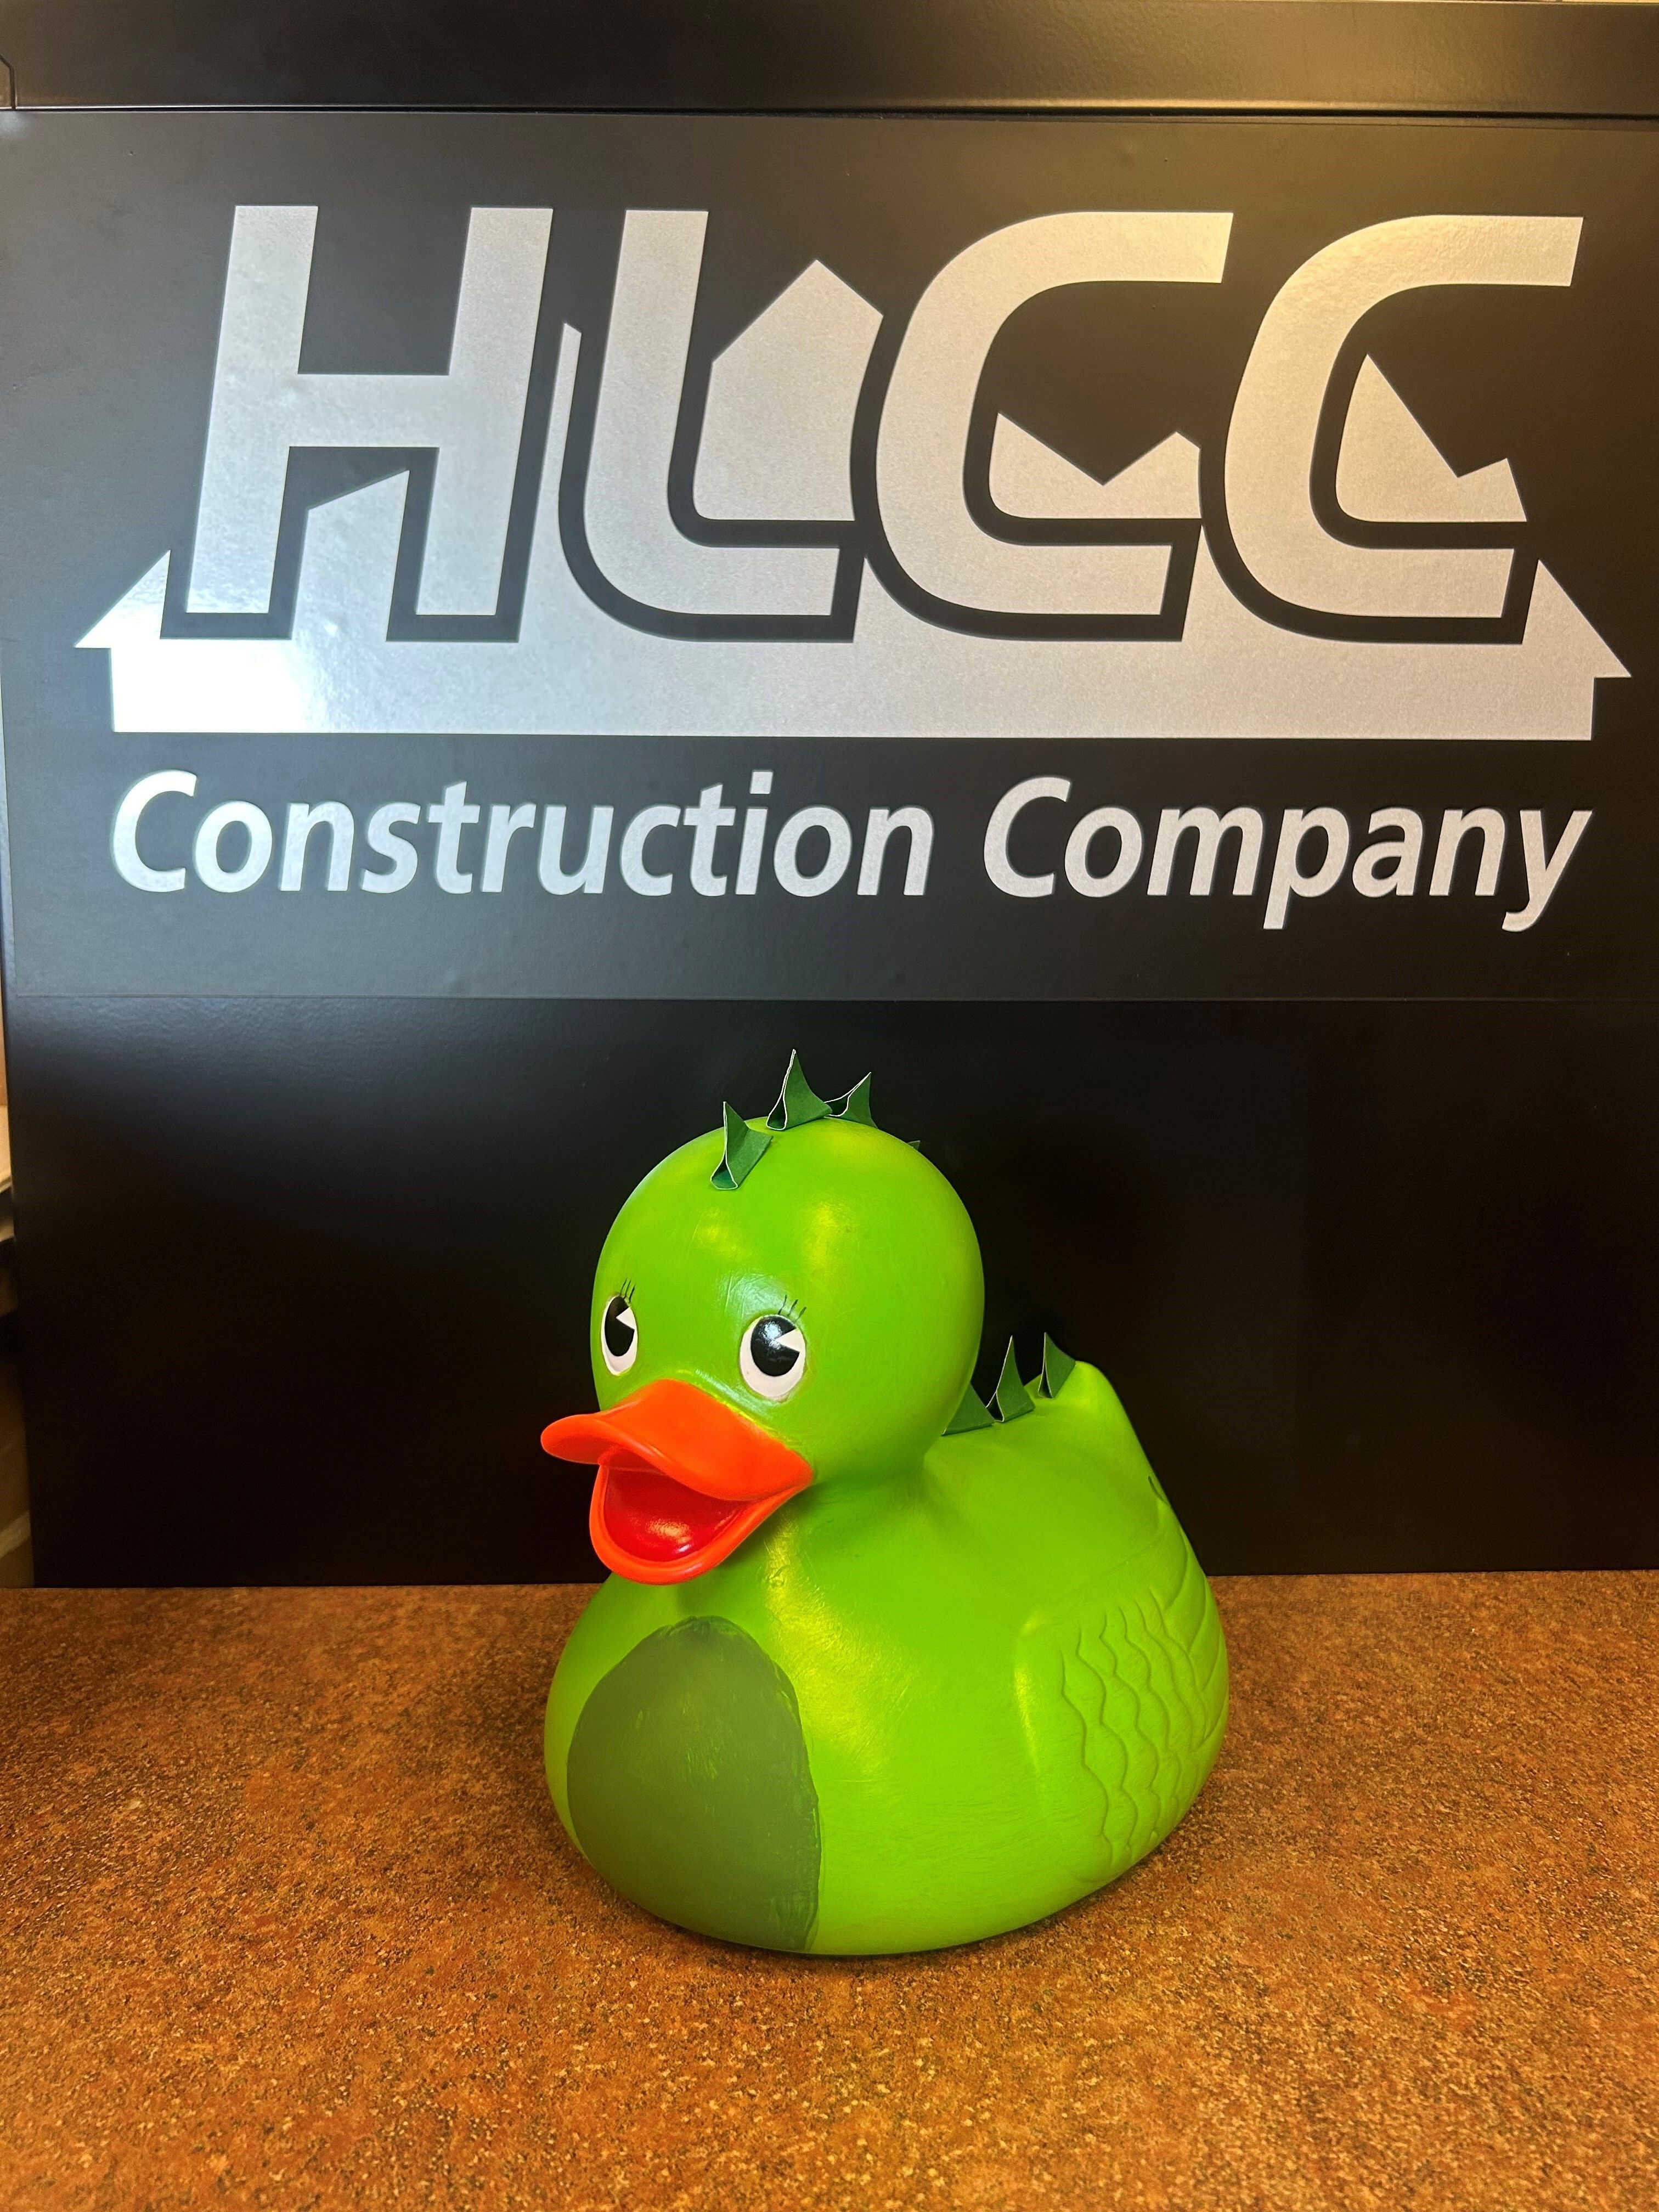 HLCC Construction Company